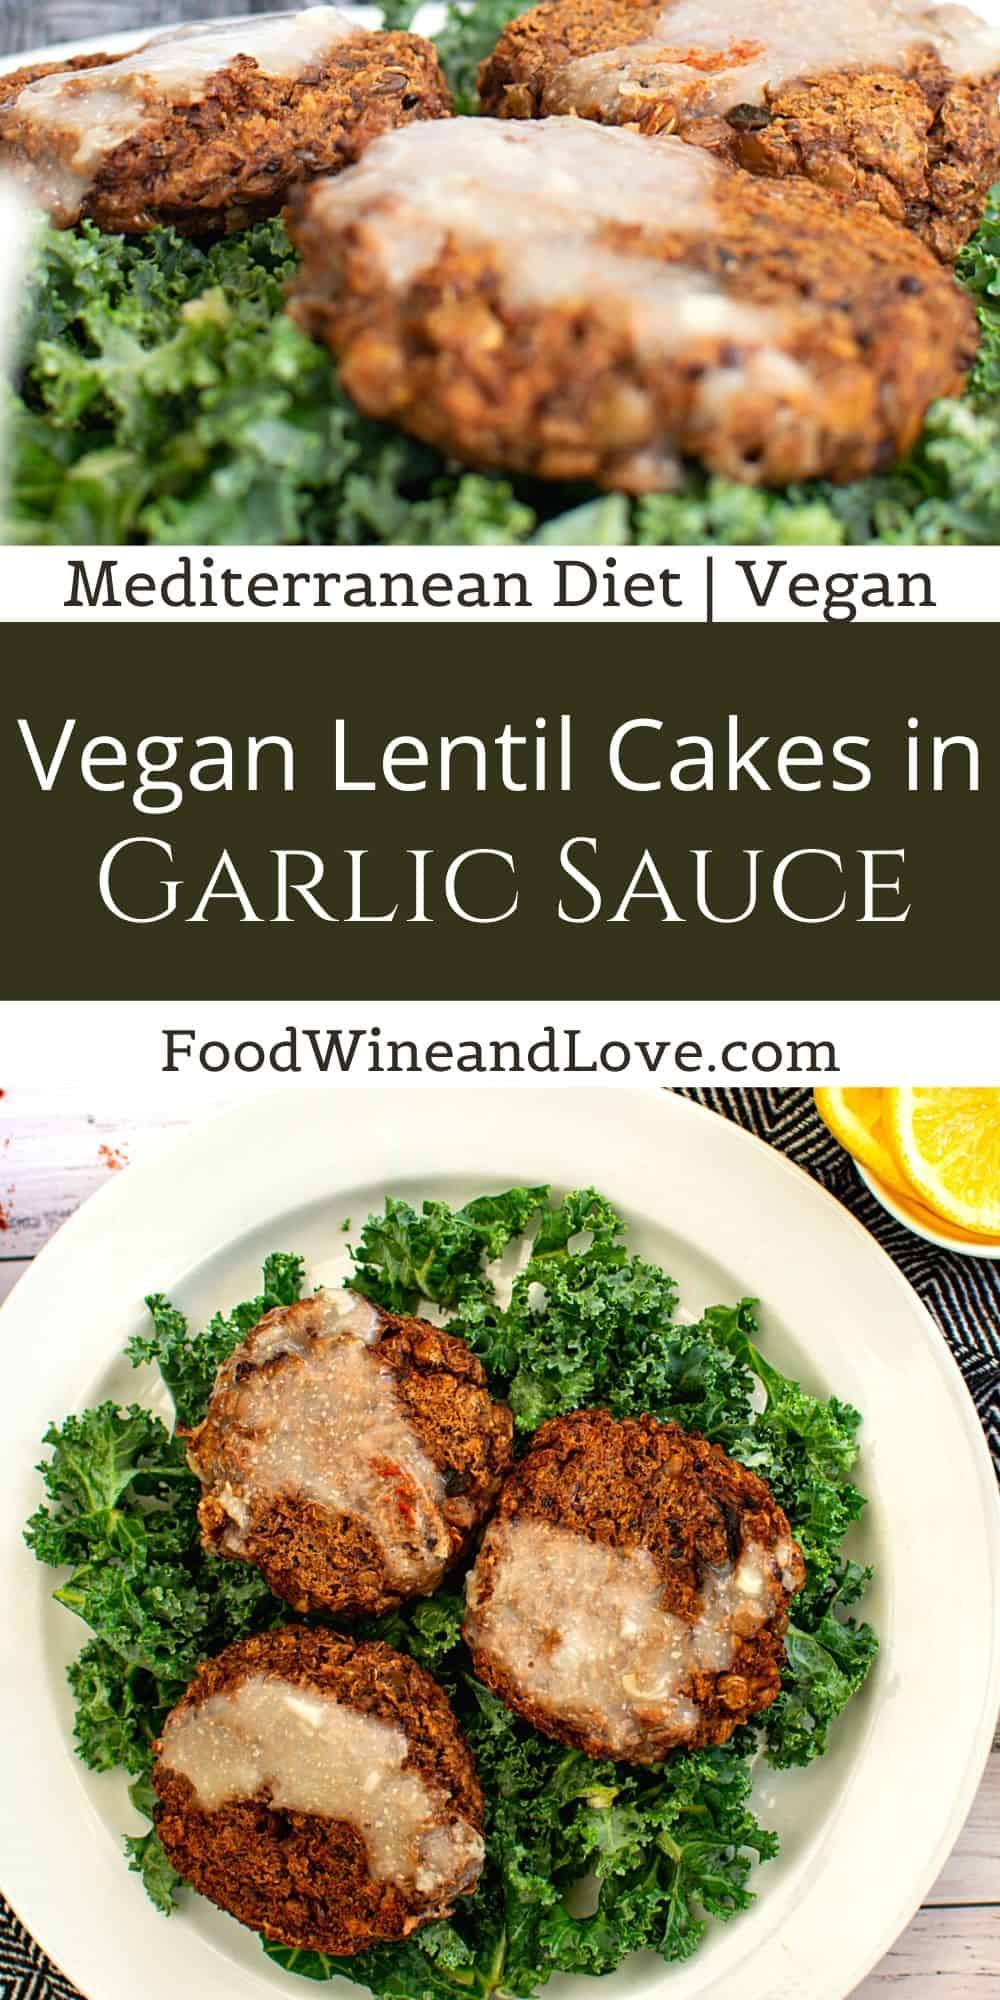 Vegan Lentil Cakes in Garlic Sauce